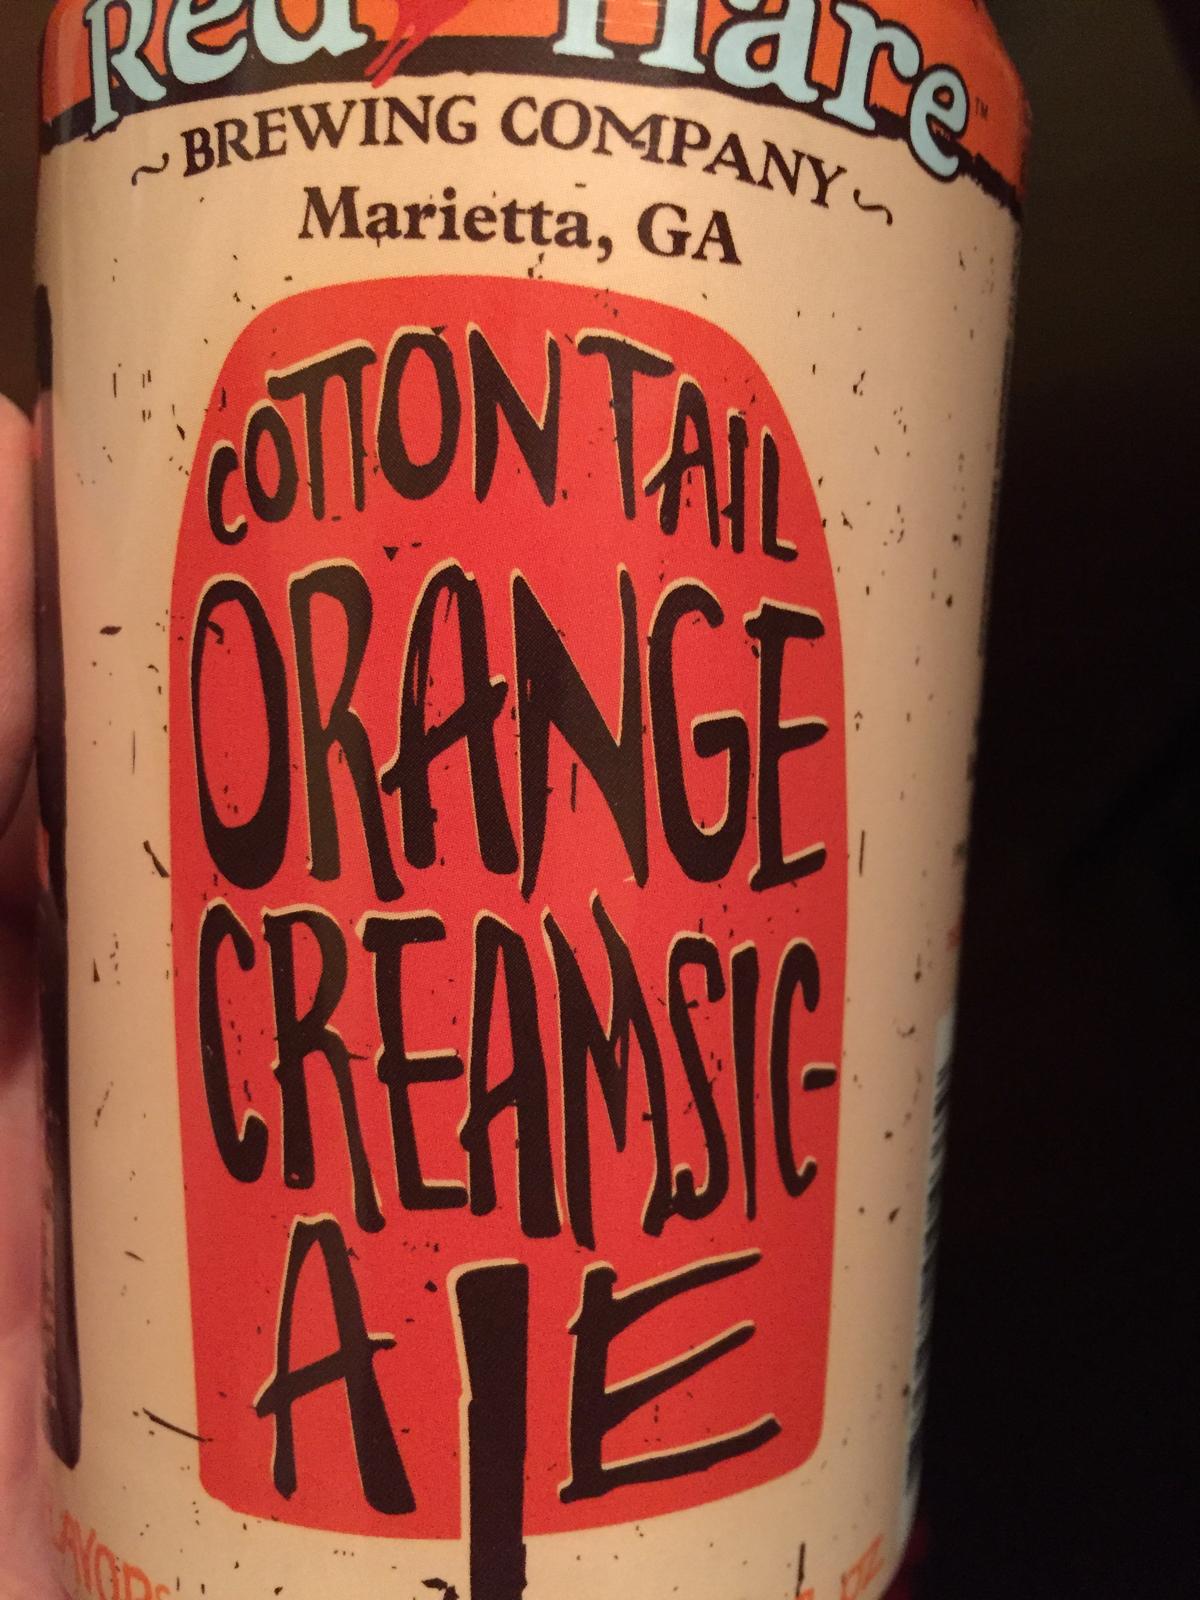 Cotton Tail Orange Creamsie Ale